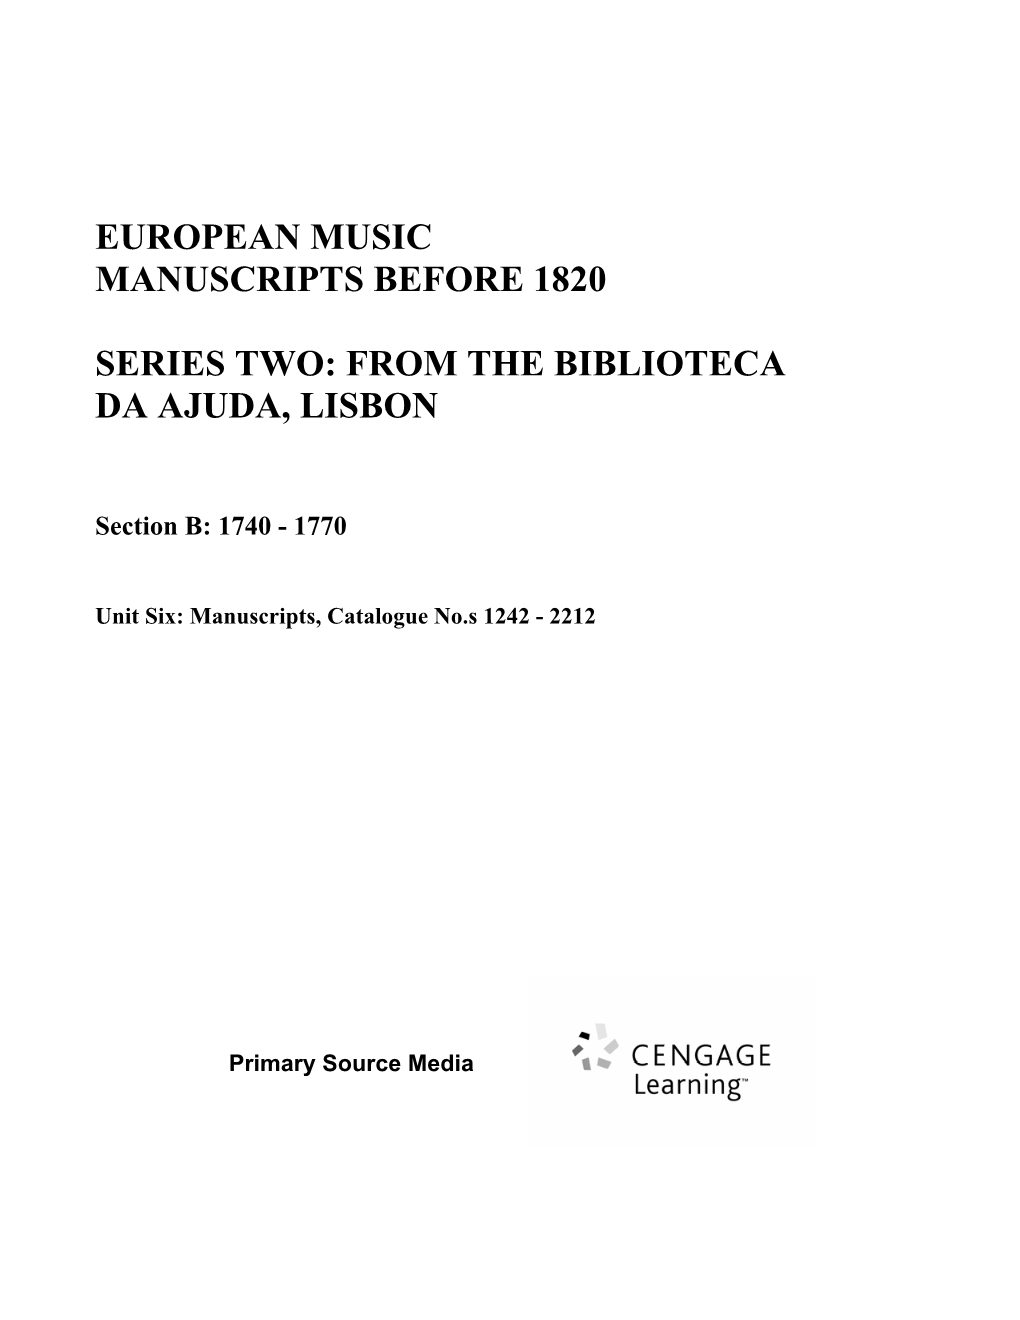 European Music Manuscripts Before 1820